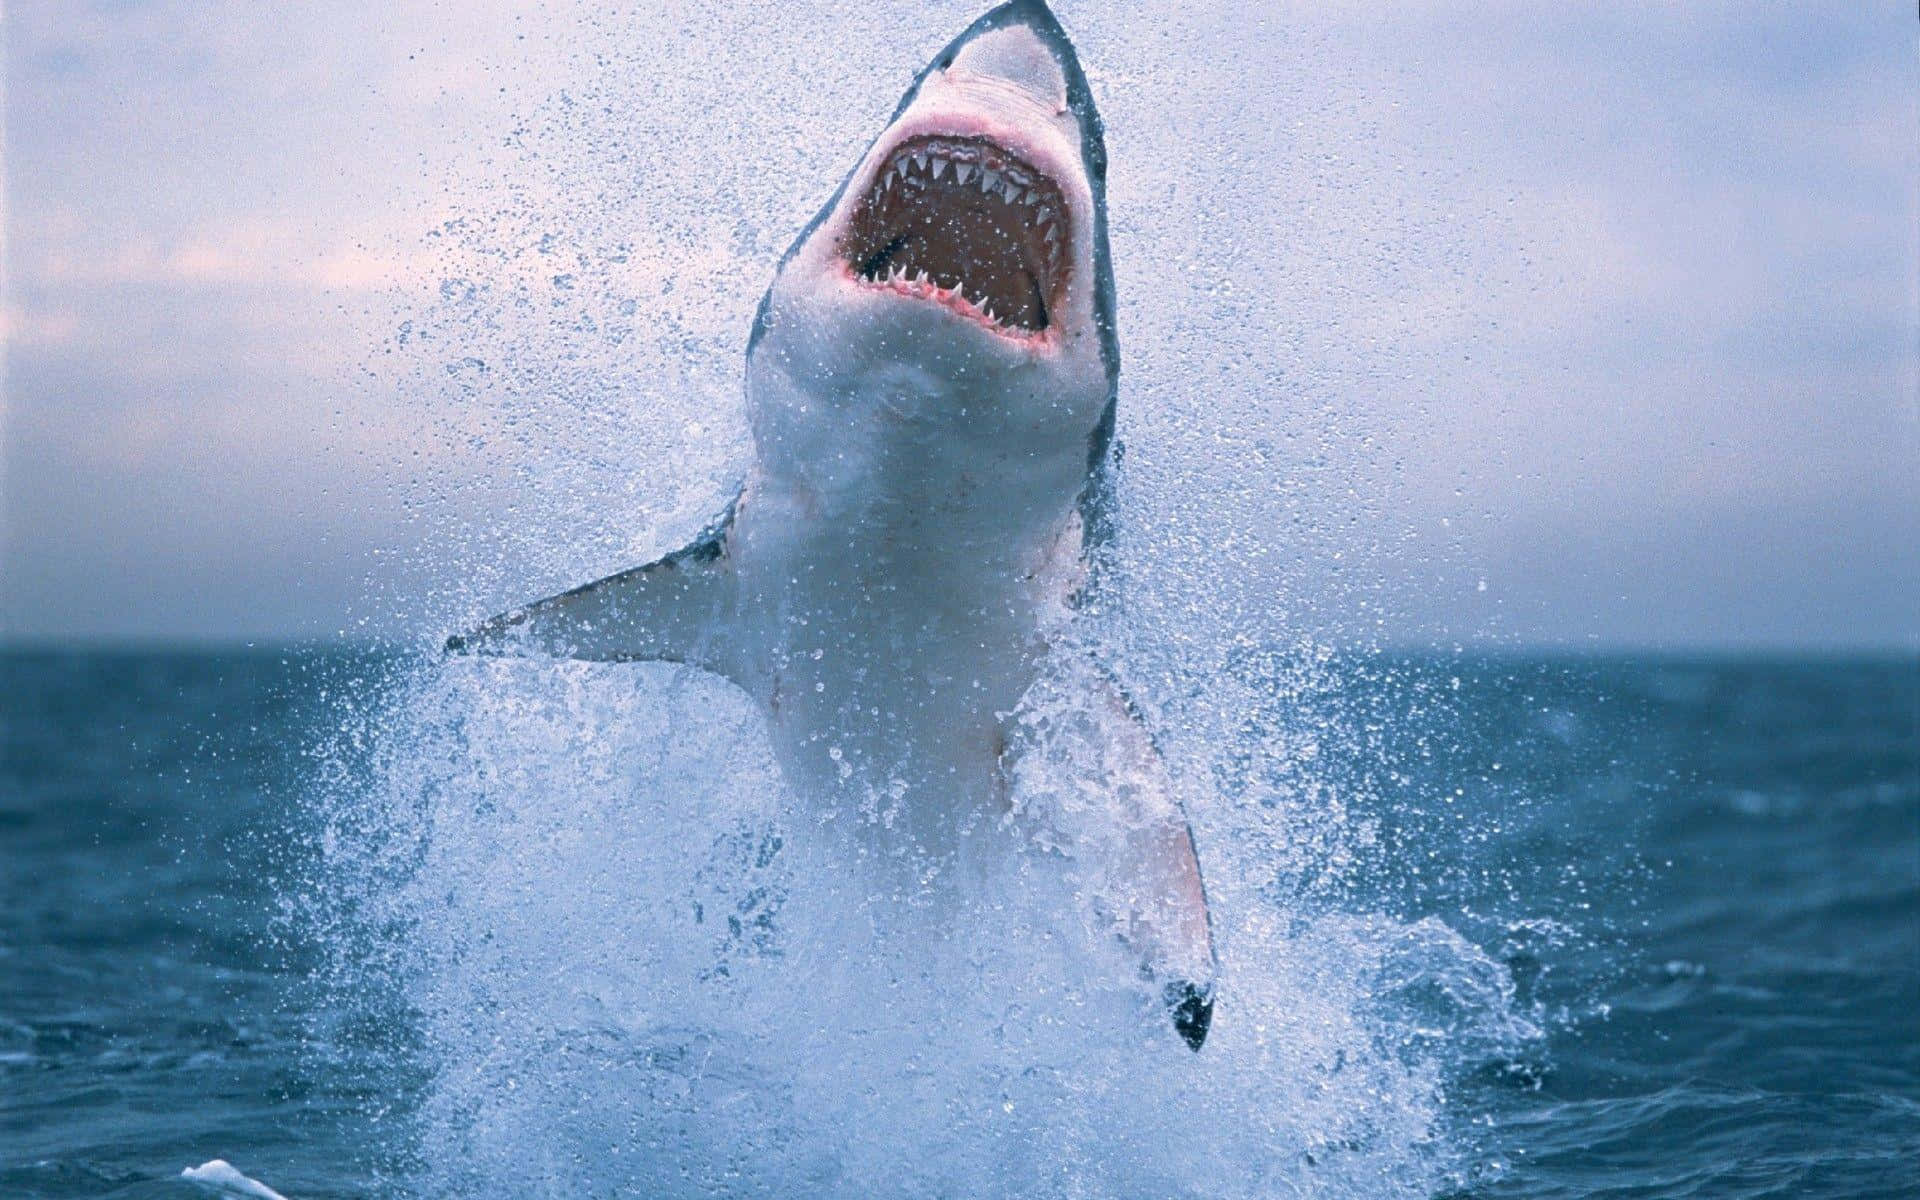 "Beware the Sharp Teeth of the Scary Shark"